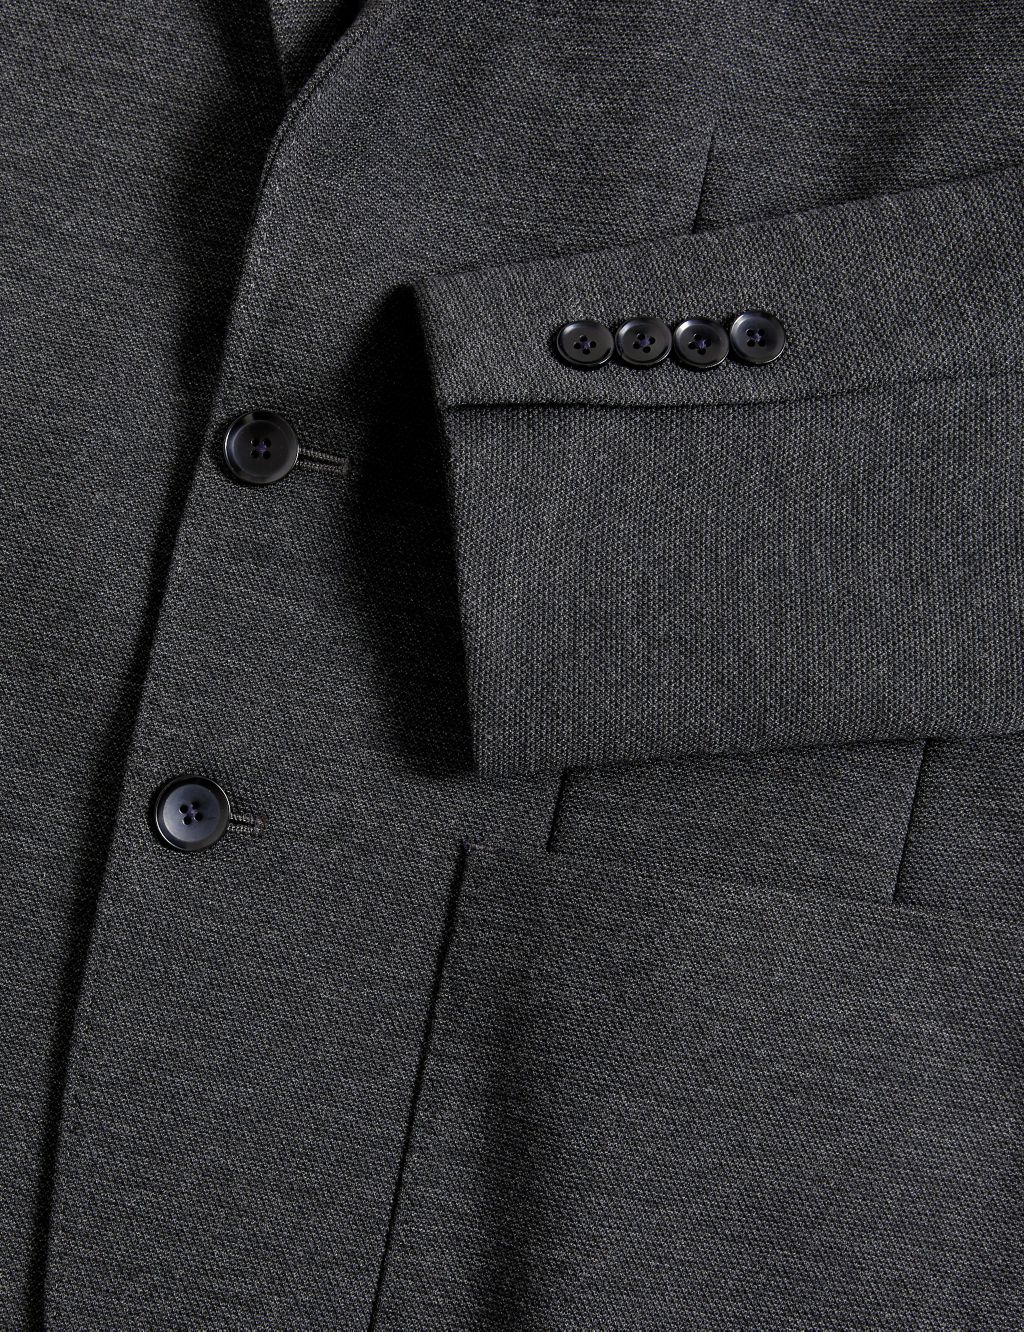 Textured Jersey Jacket image 5